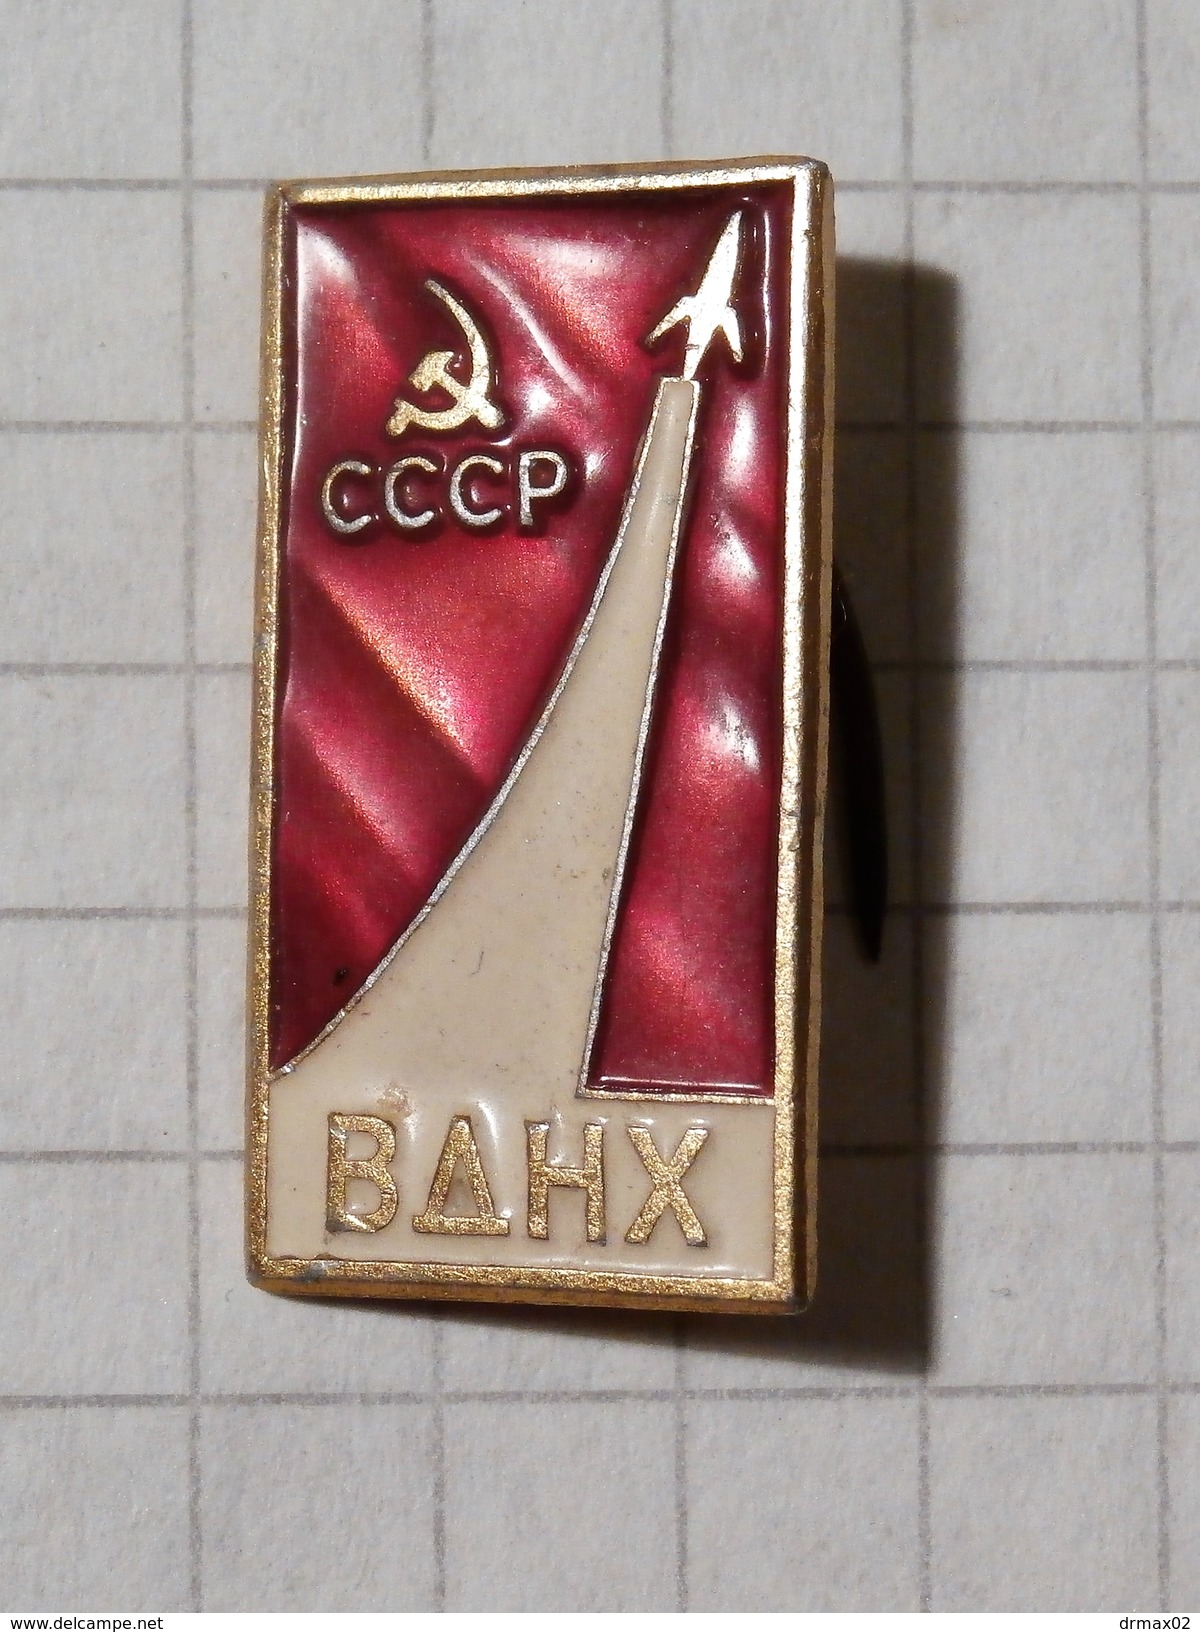 ROCKET VDNH SOVIET RUSSIAN SPACE / USSR - Space